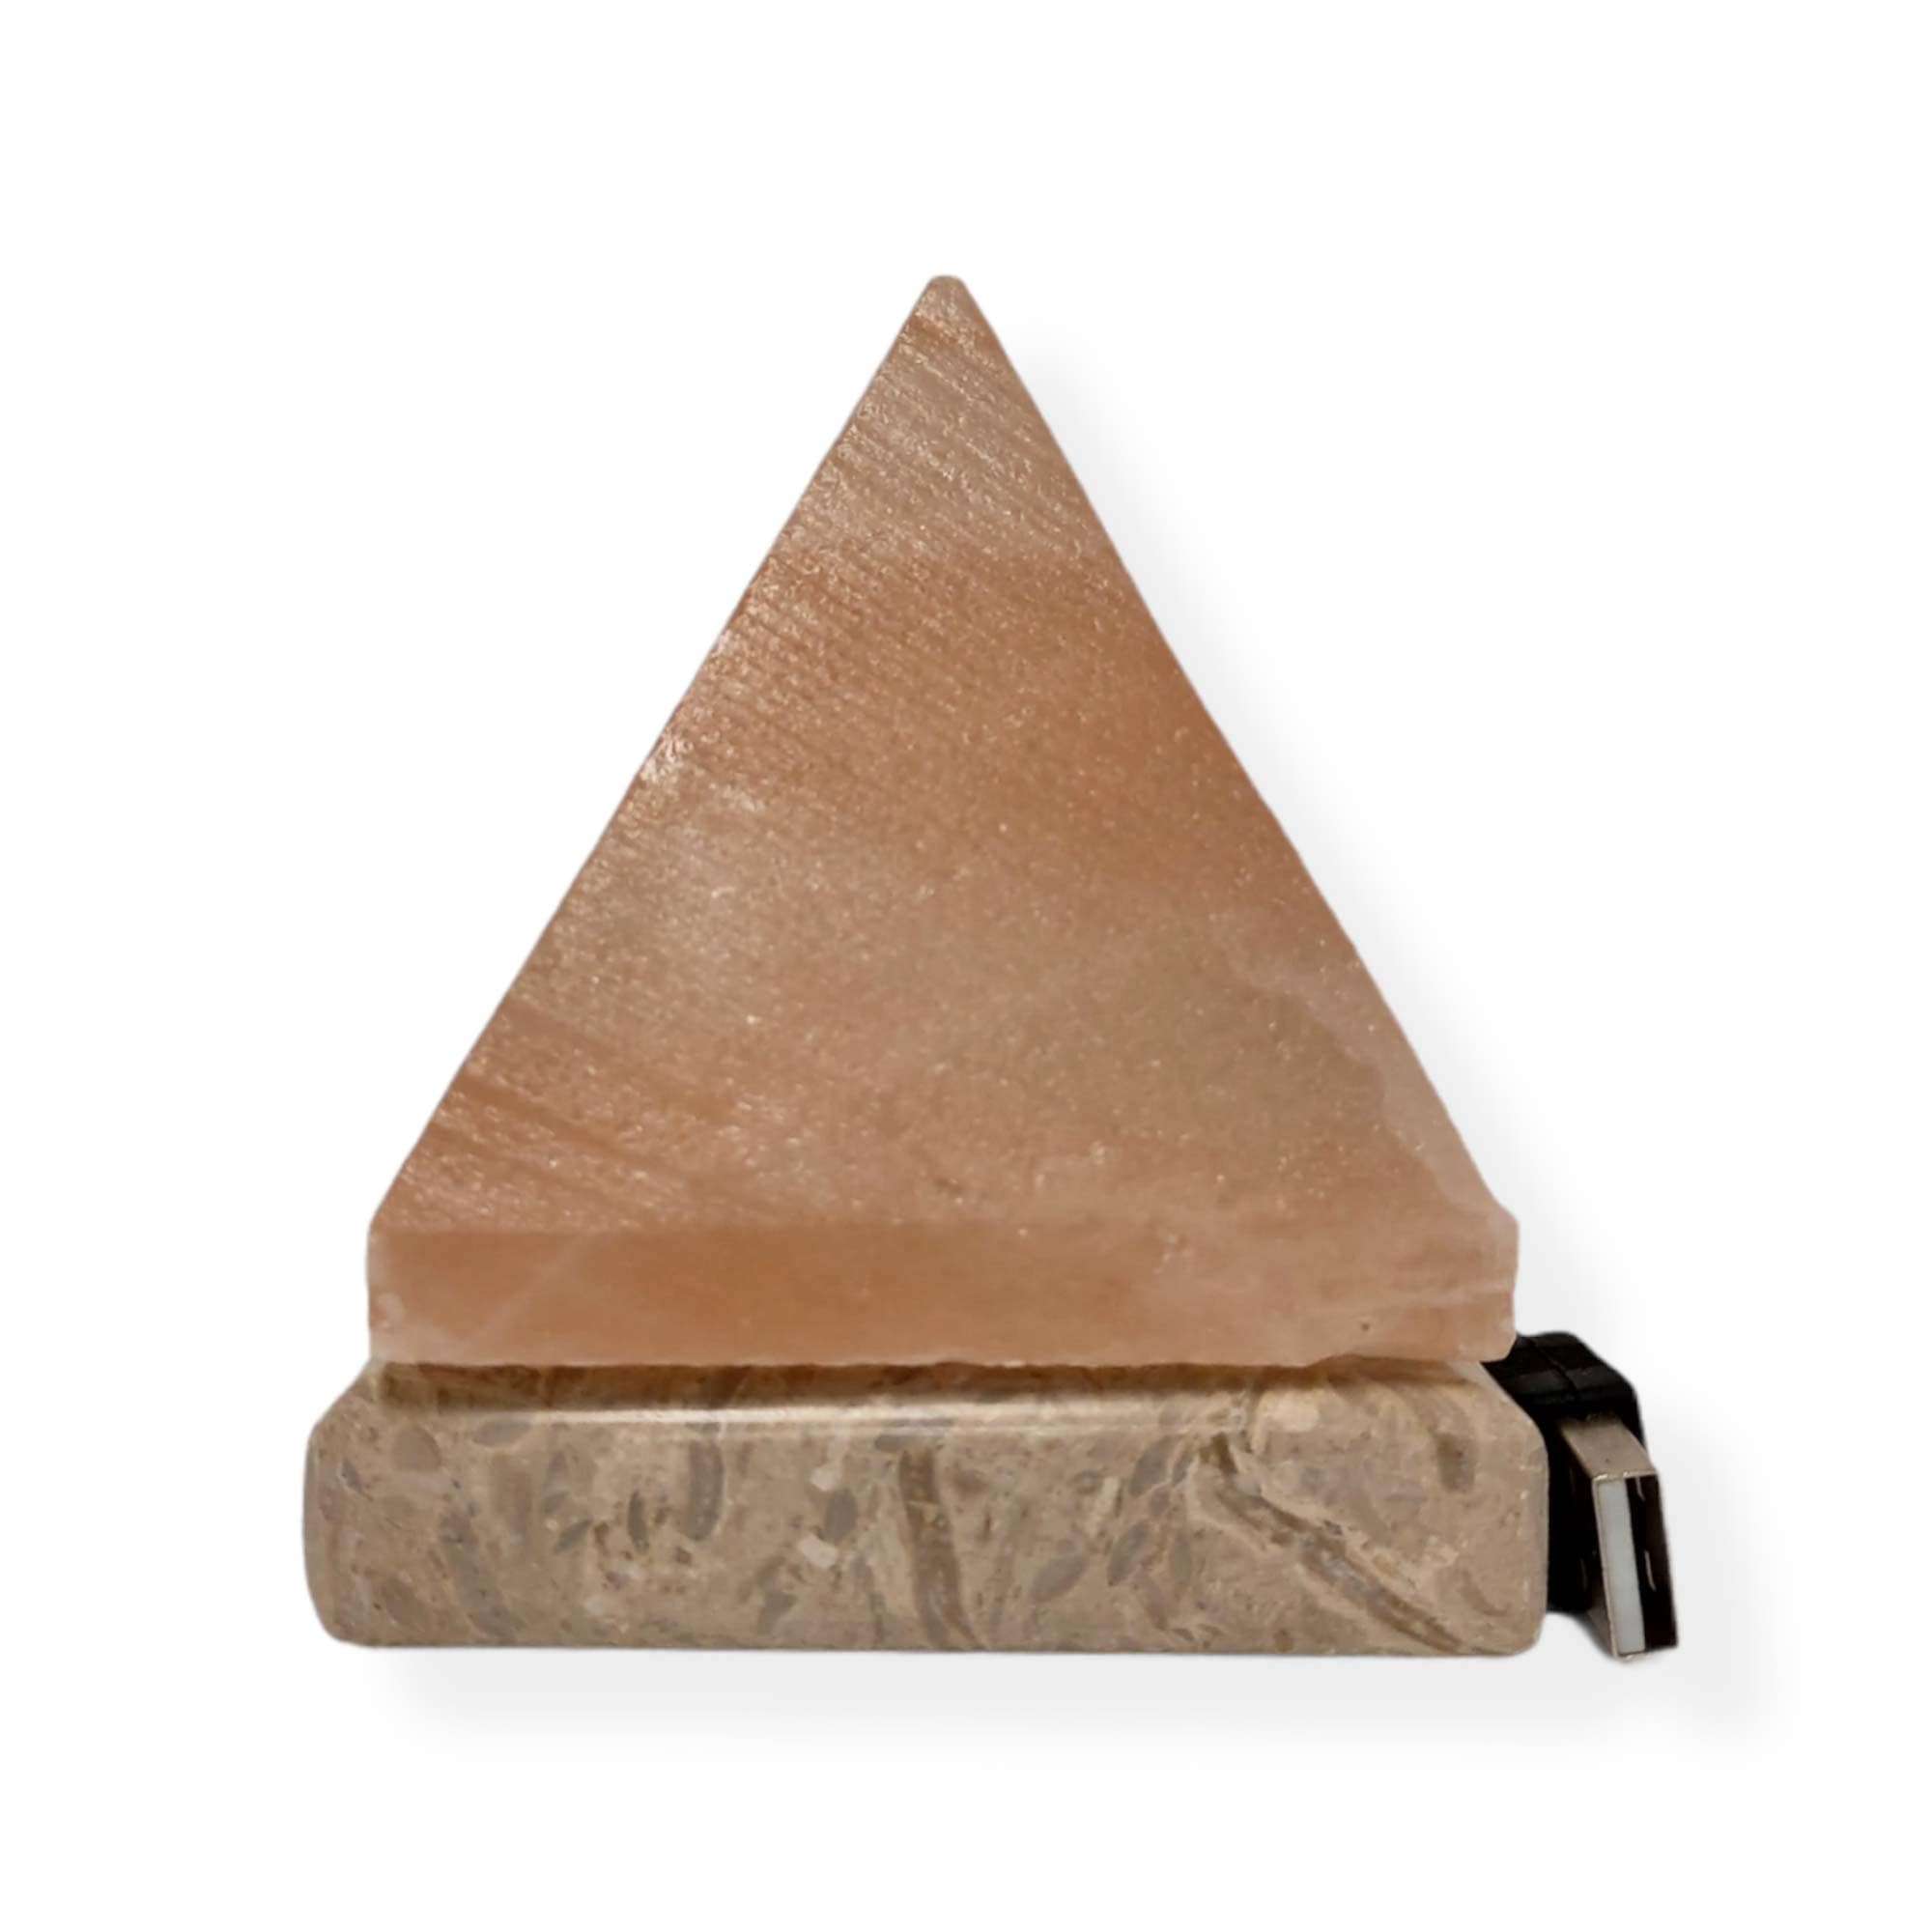 USB Himalayan Salt Lamp - Pyramid Triangle Carved Shape Pink Crystal Rock Light